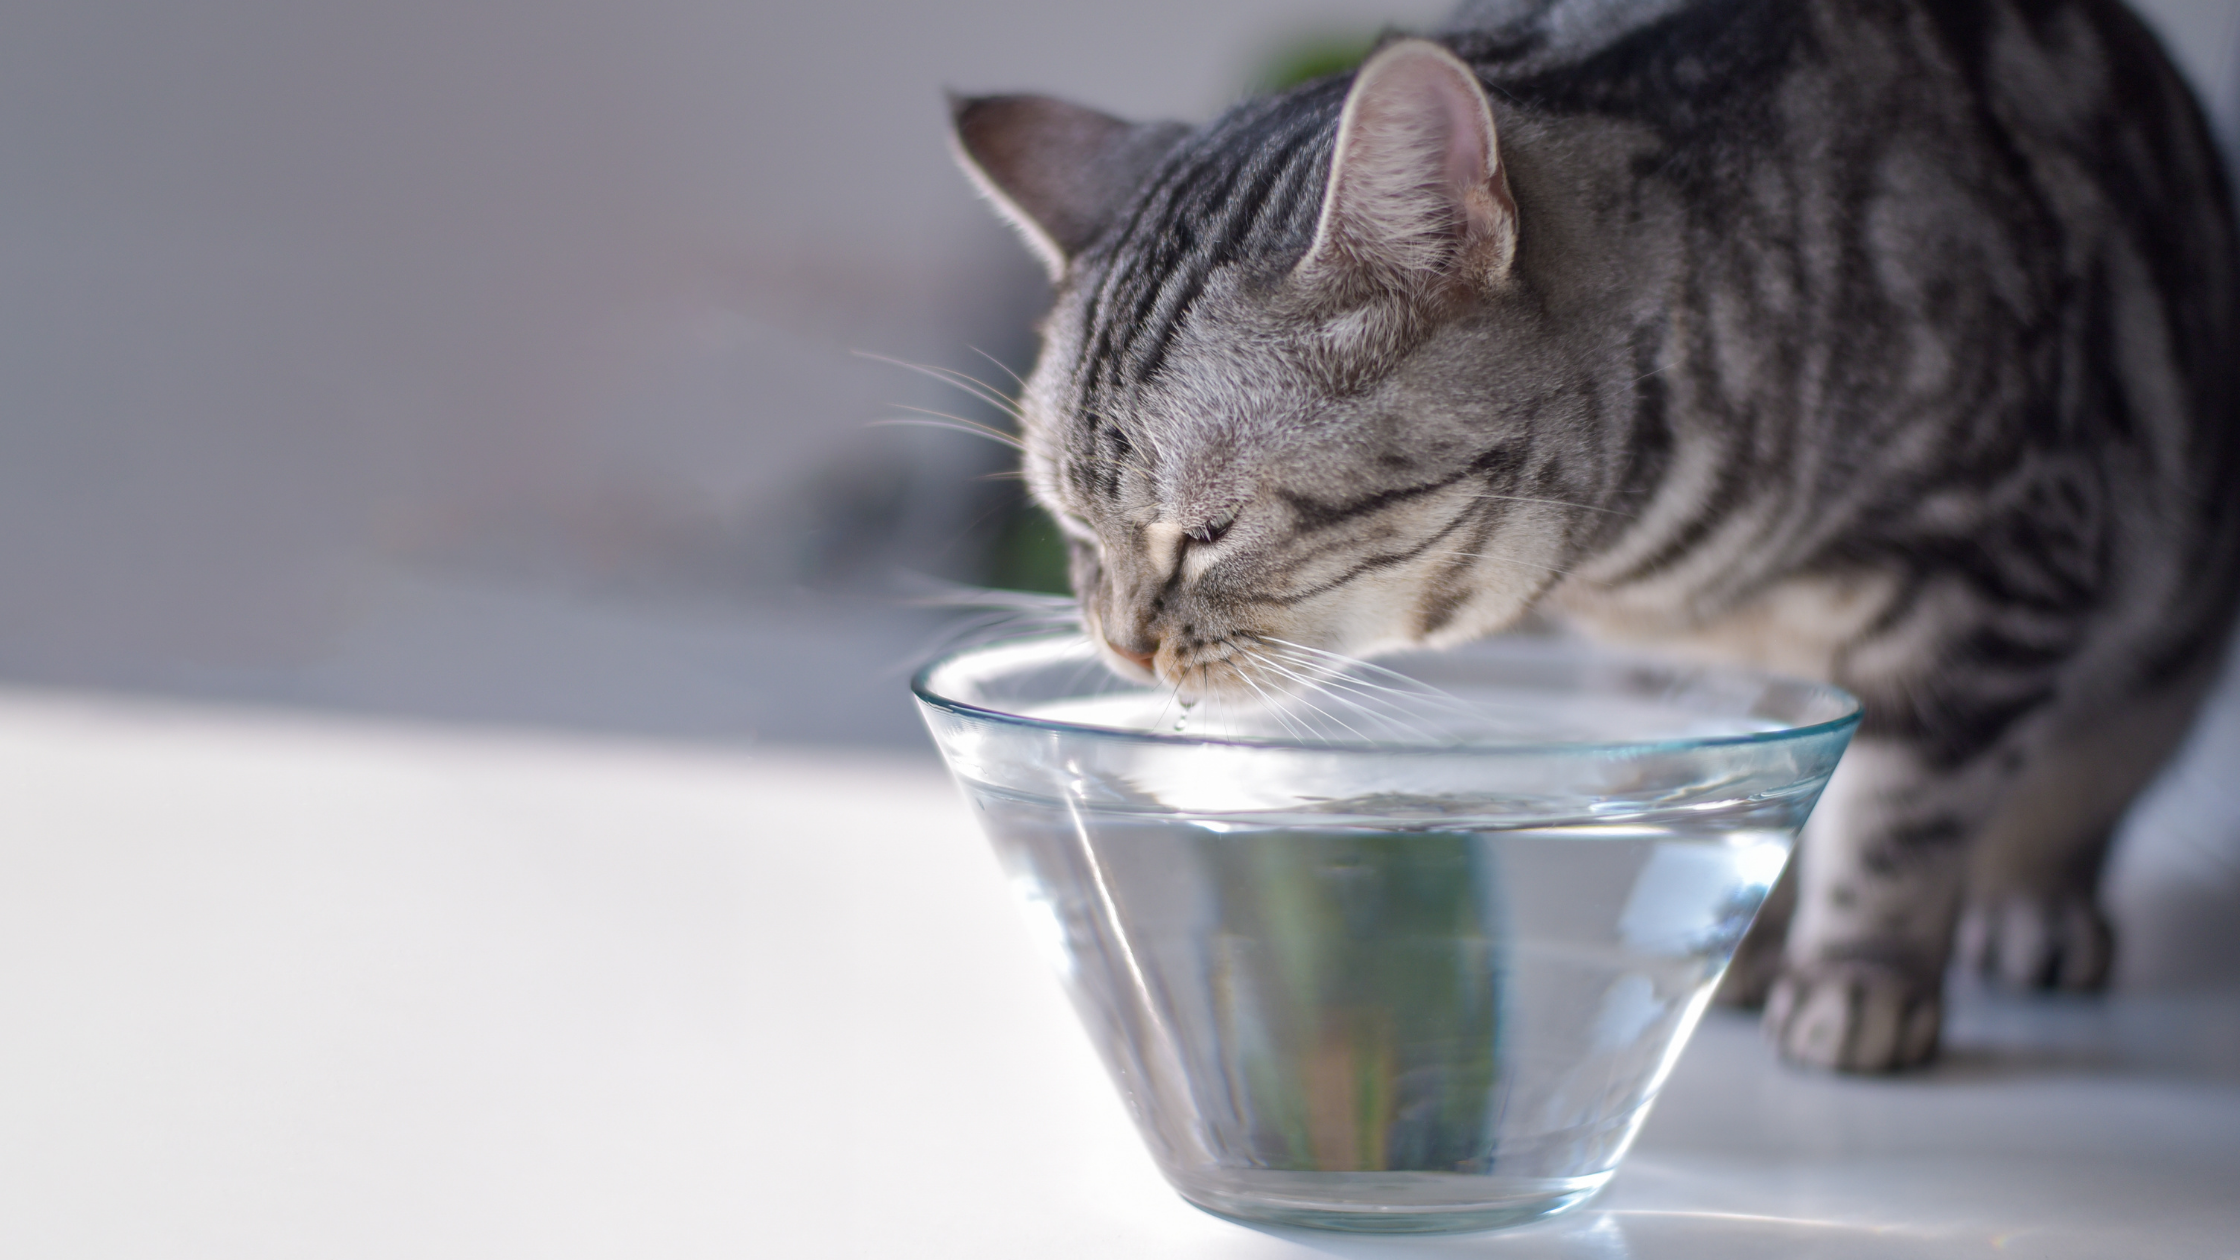 Senior Cat Nutrition 101 - Cat Food & Cat Nutrition (Part 3)